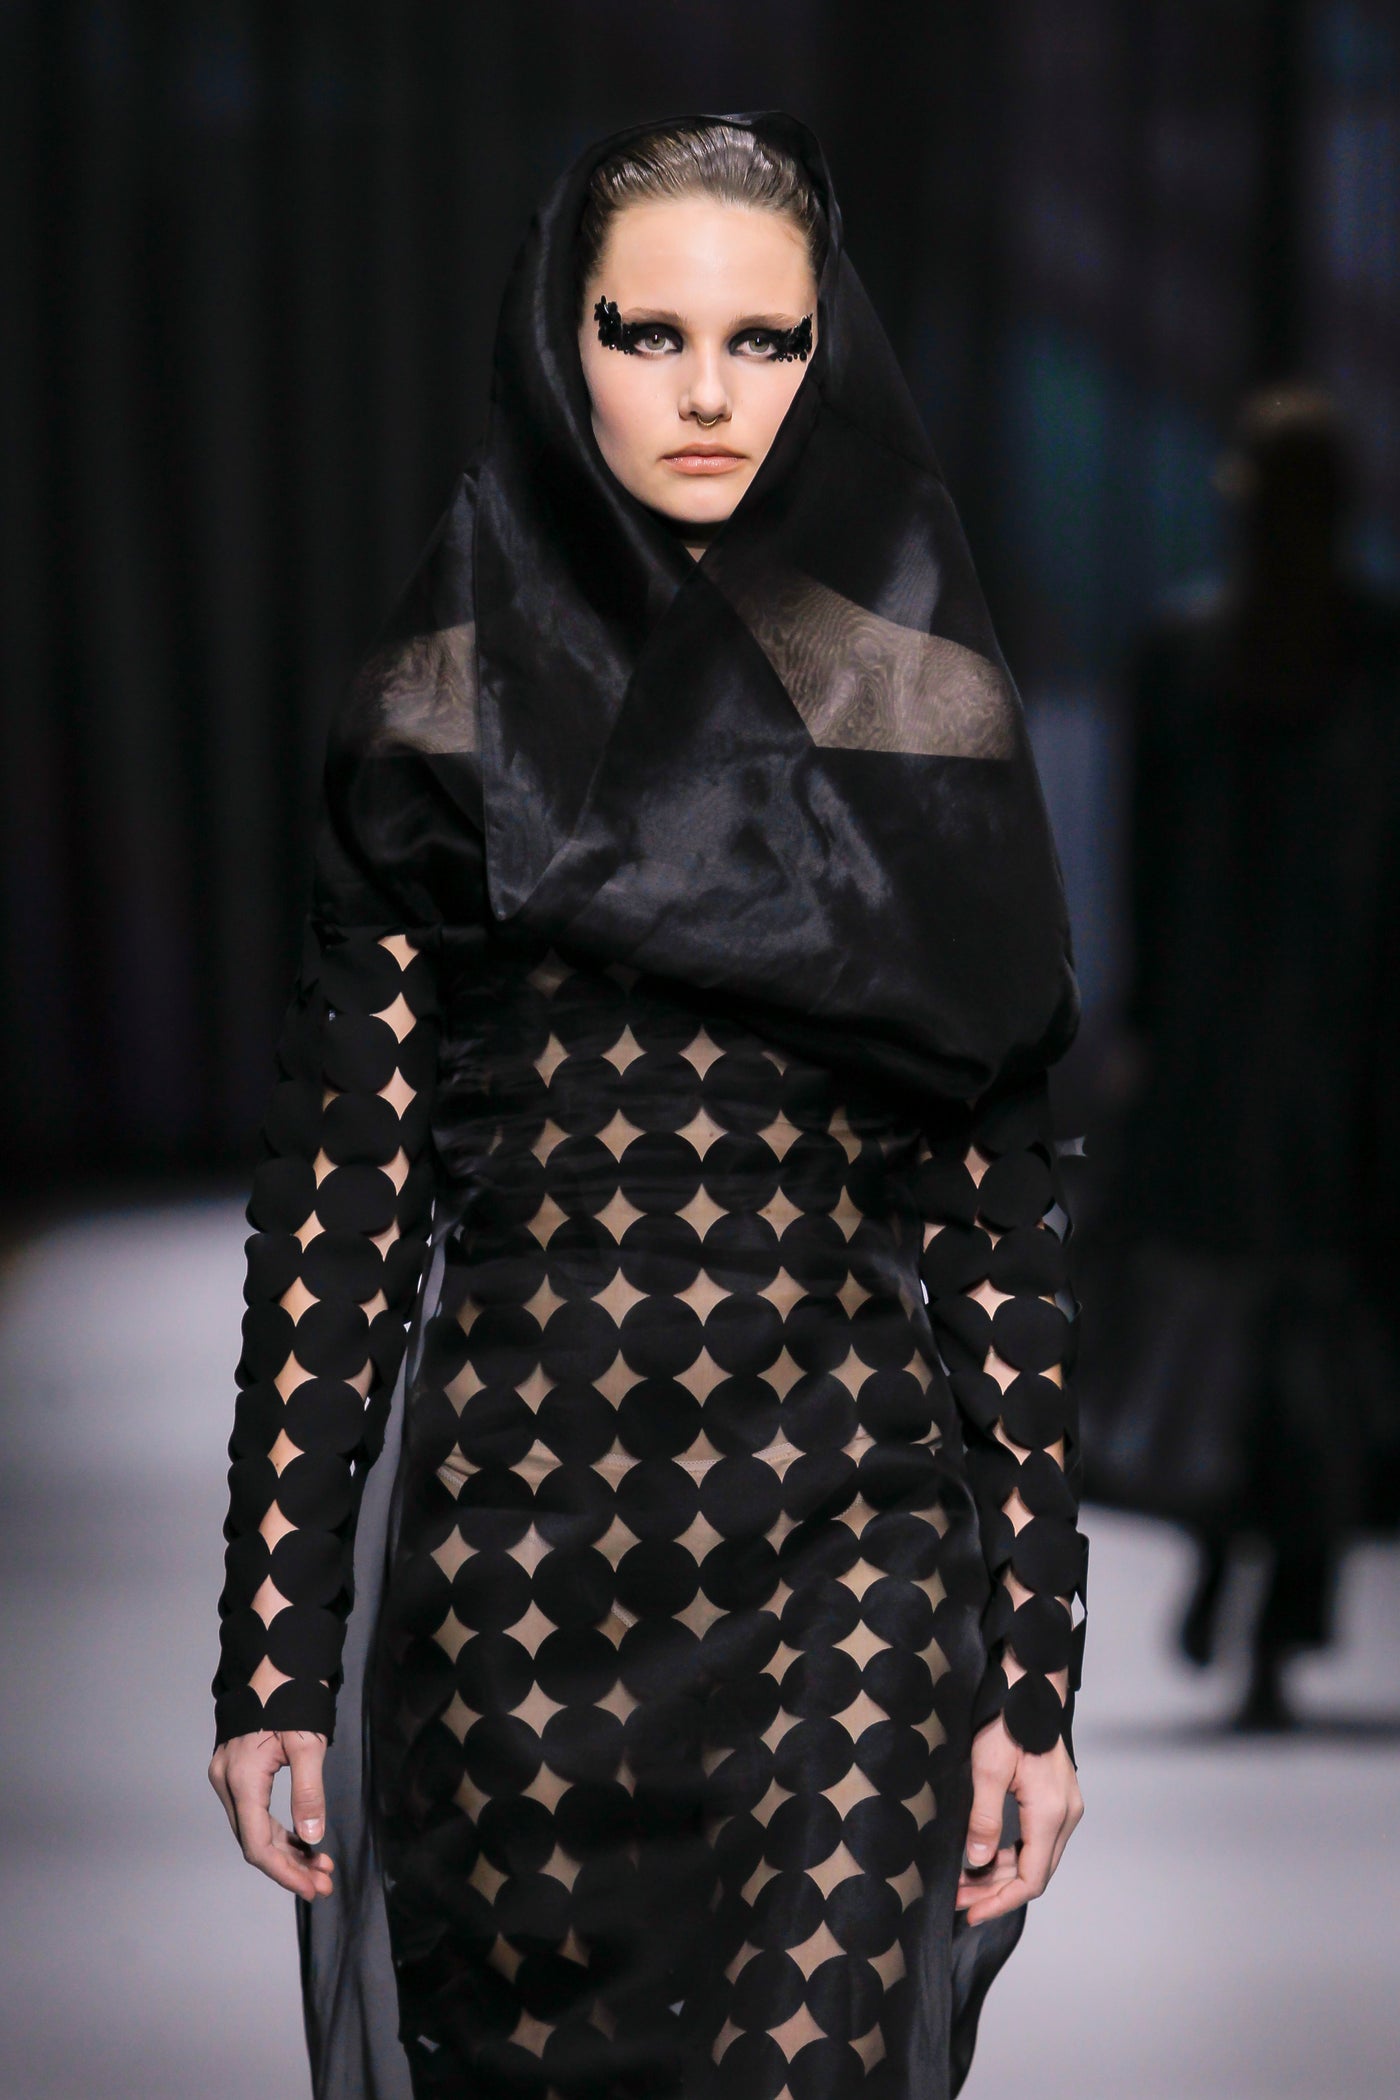 Black Silk Organza Dress with Interior Lasercut